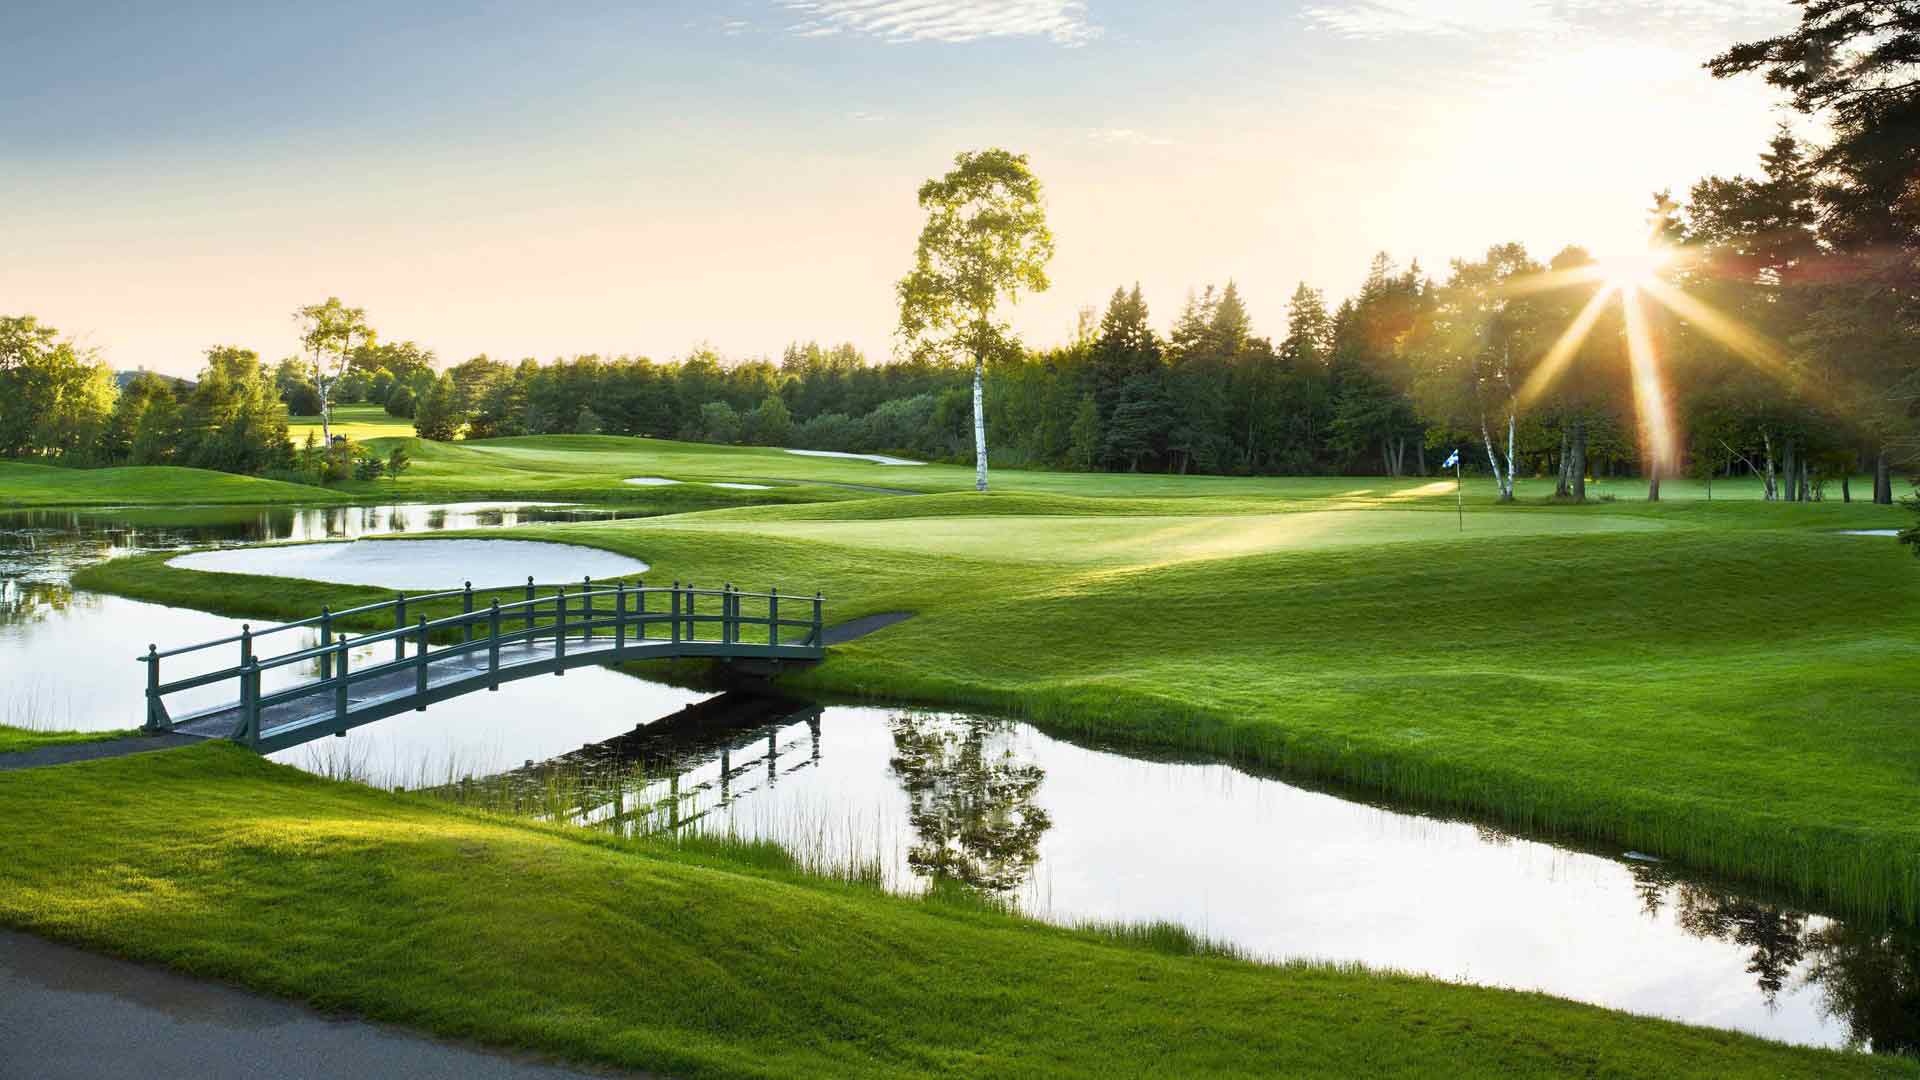 Golf Course: Landscape architecture, River, Tee-box, Bent grass, Meadow, Nature, Sunlight. 1920x1080 Full HD Wallpaper.